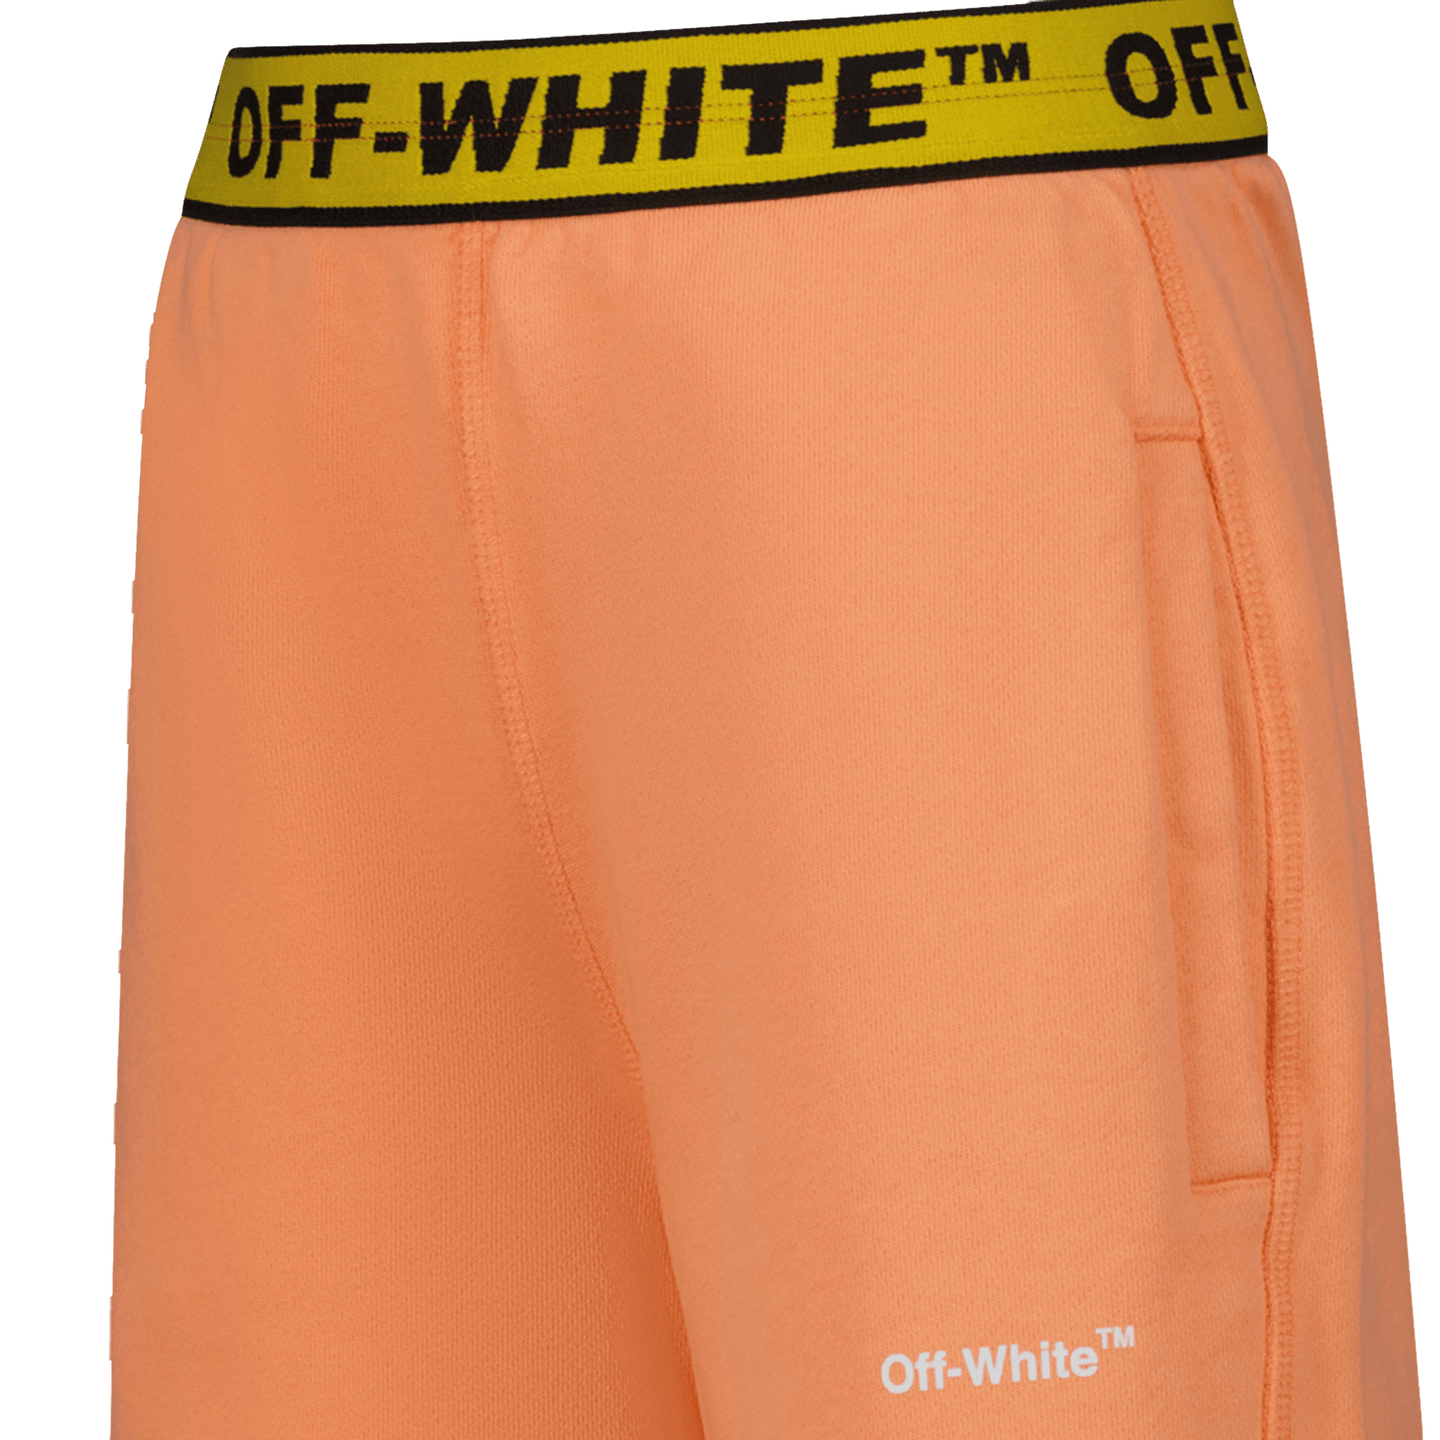 Off-White Kinder Jongens Shorts Zalm 4Y